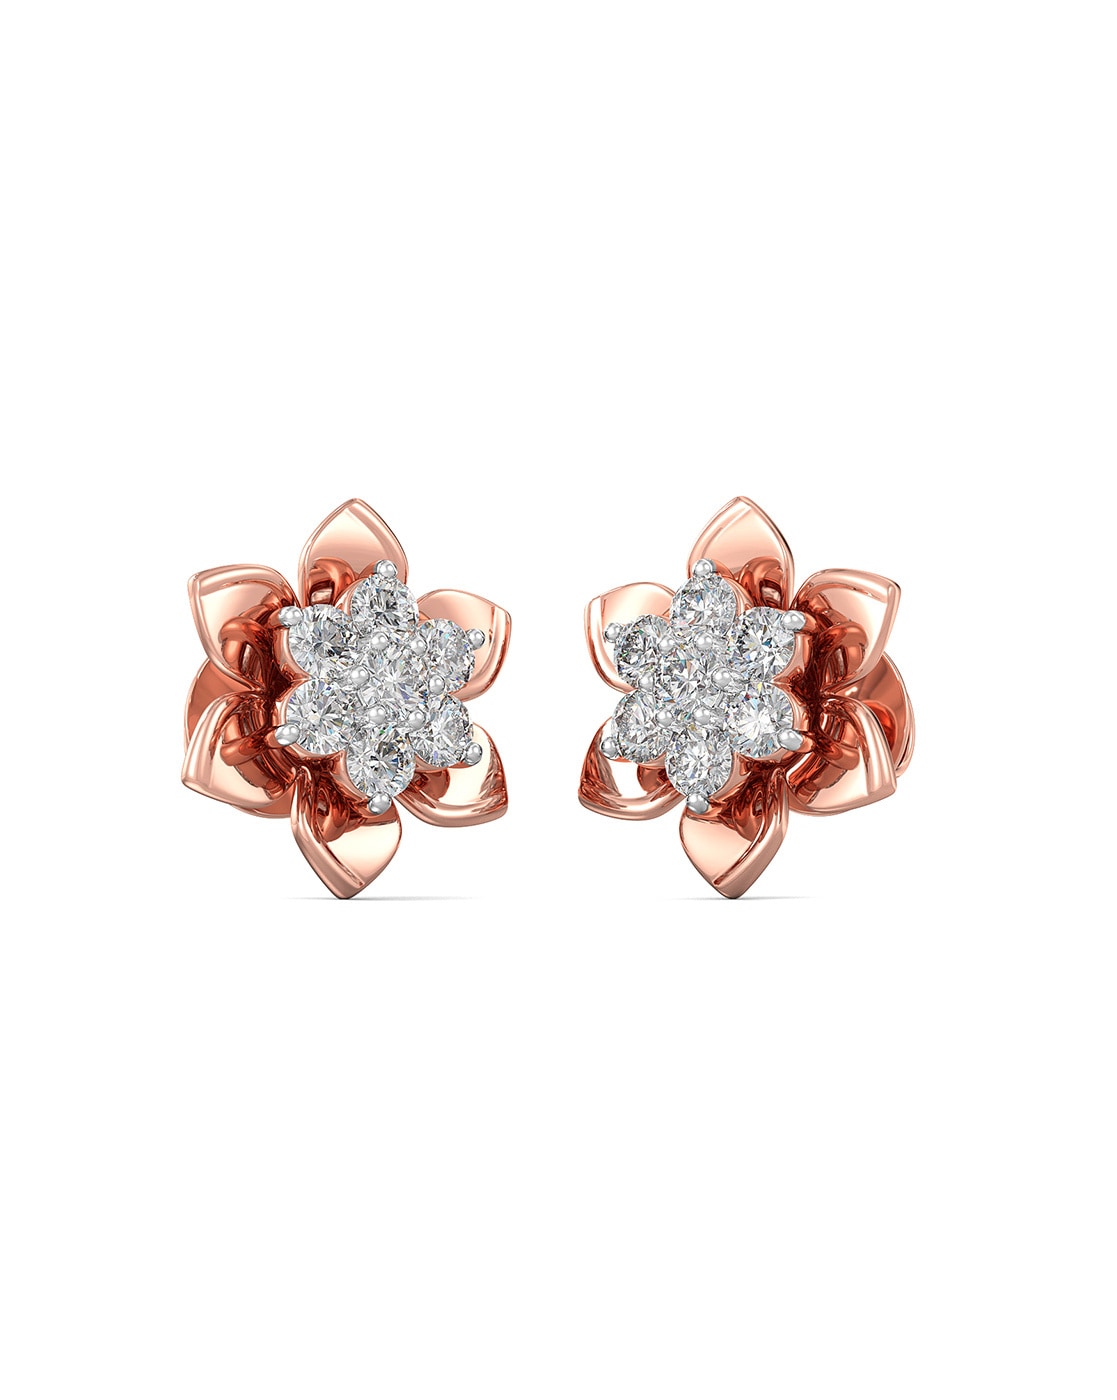 Rose Flower Diamond Earrings Stud Rose Gold  24kdiamond